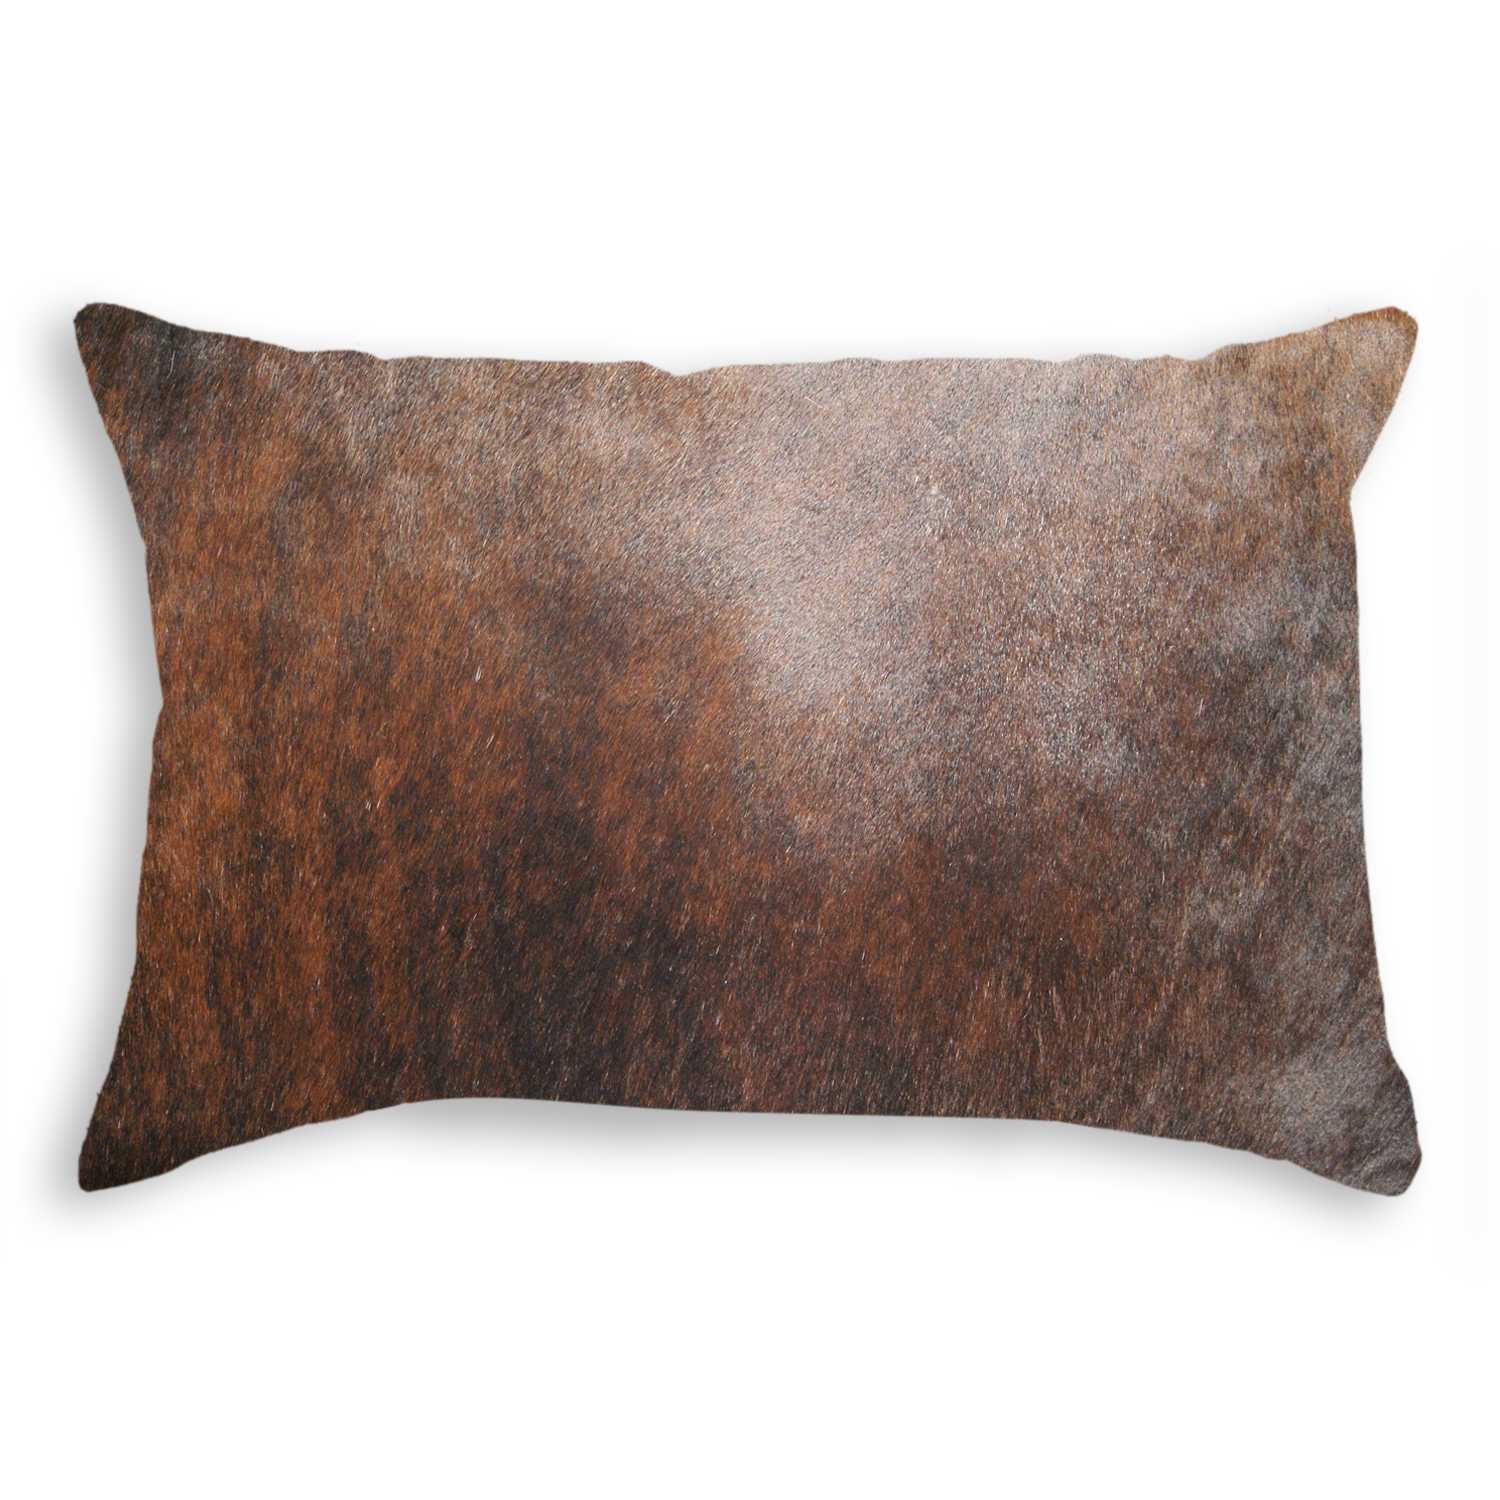 12" x 20" x 5" Brown Cowhide - Pillow